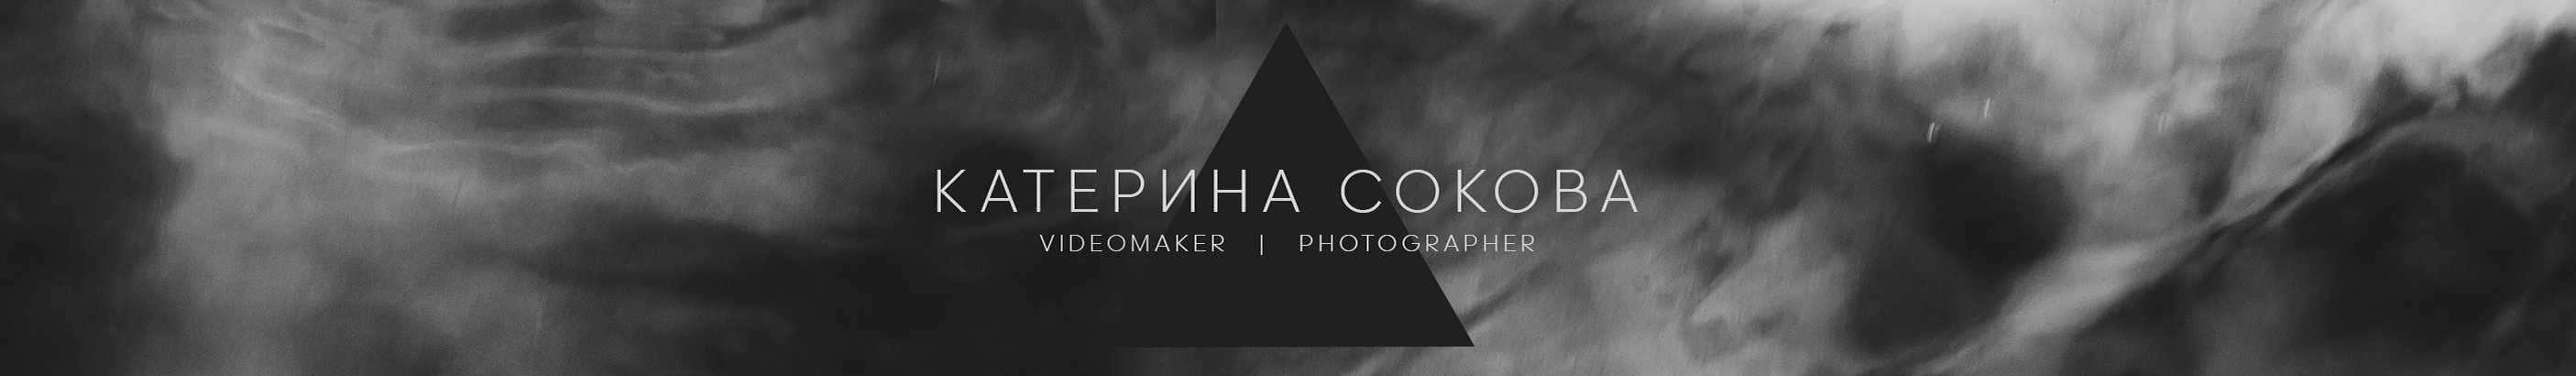 Katerina Sokova's profile banner